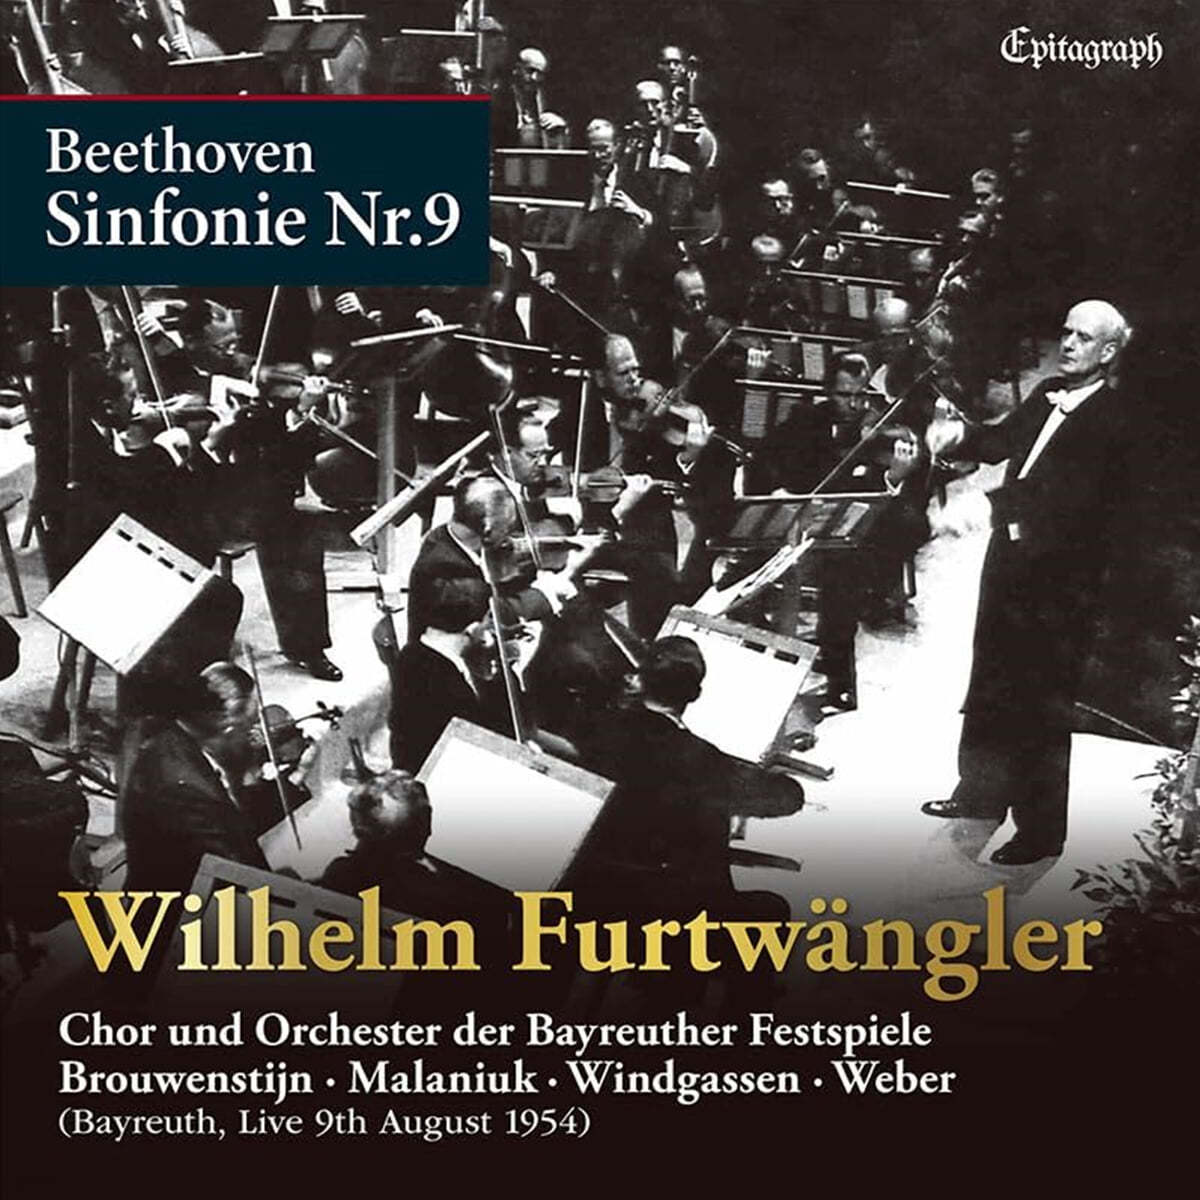 Wilhelm Furtwangler 베토벤: 교향곡 9번 "합창" (Beethoven: Symphony No. 9 "Chorus")